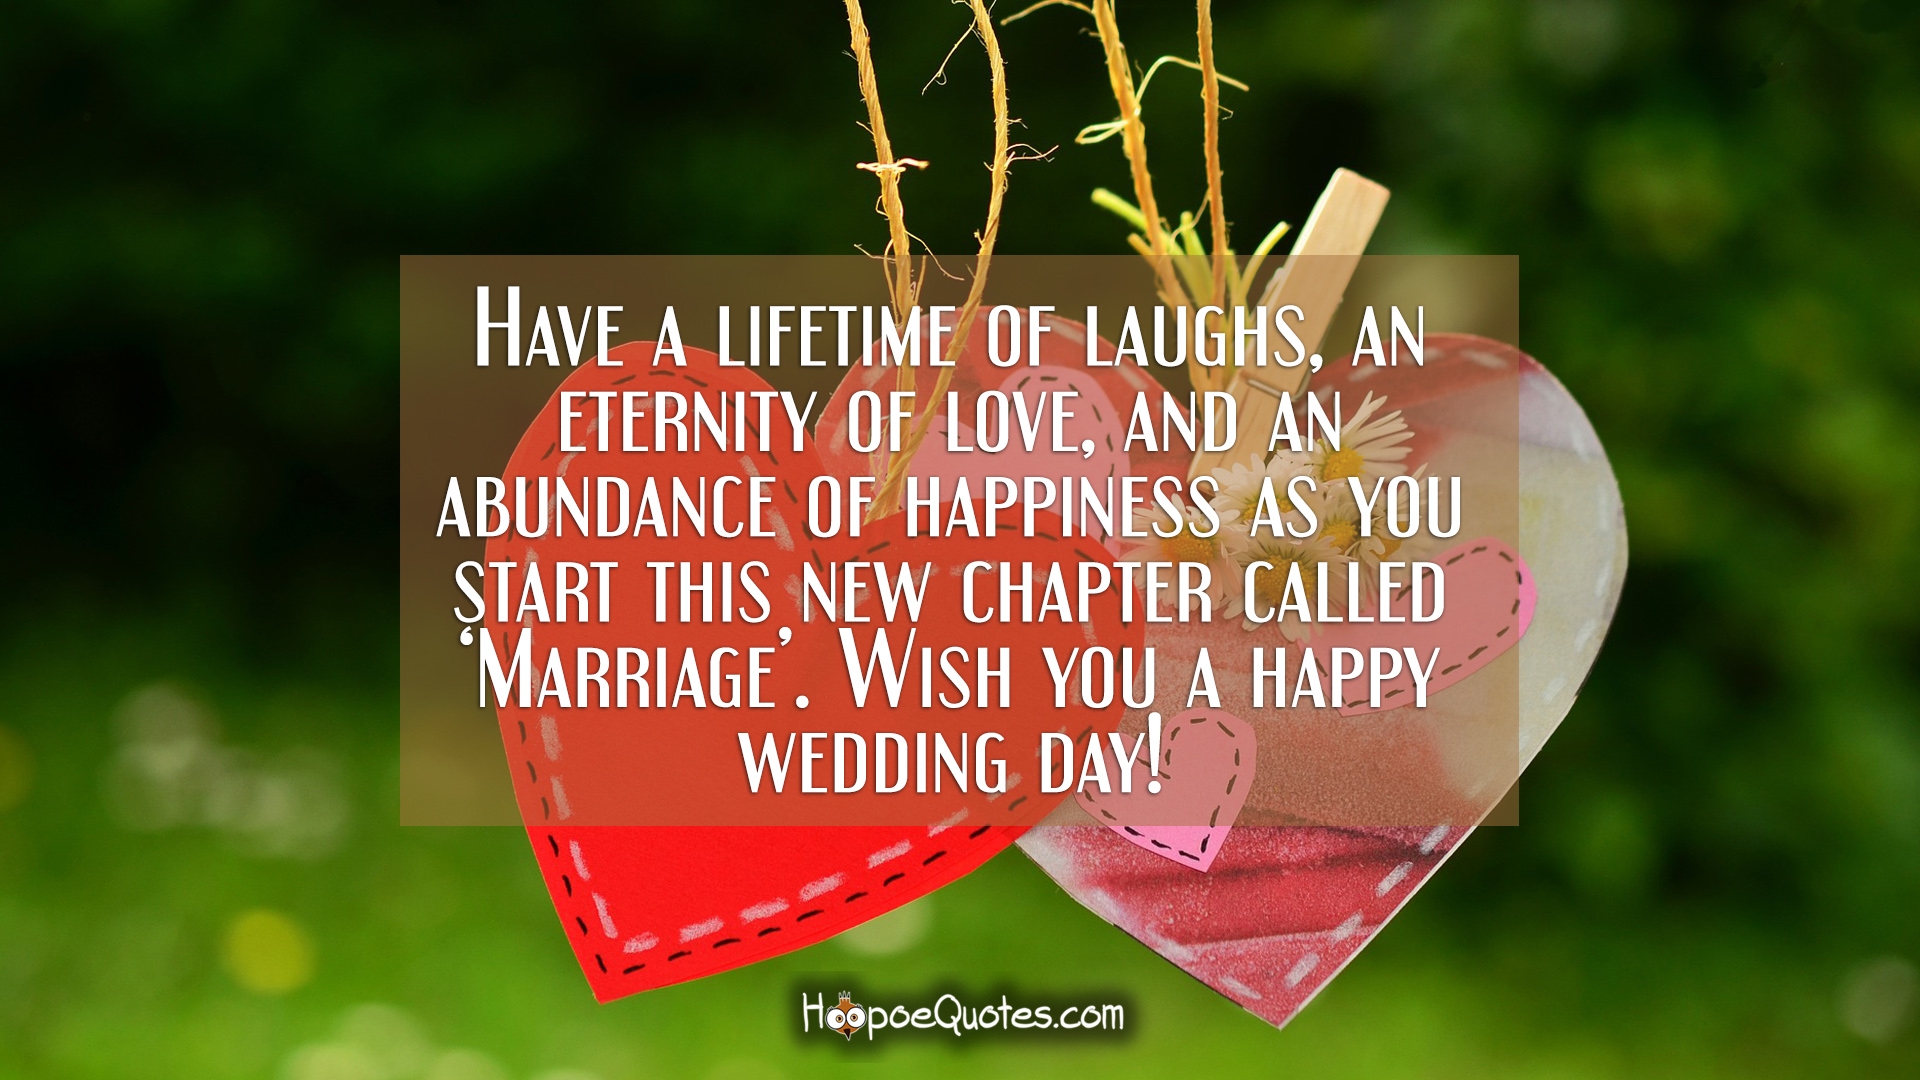 Wish You Abundance Of Happiness - 1920x1080 Wallpaper 